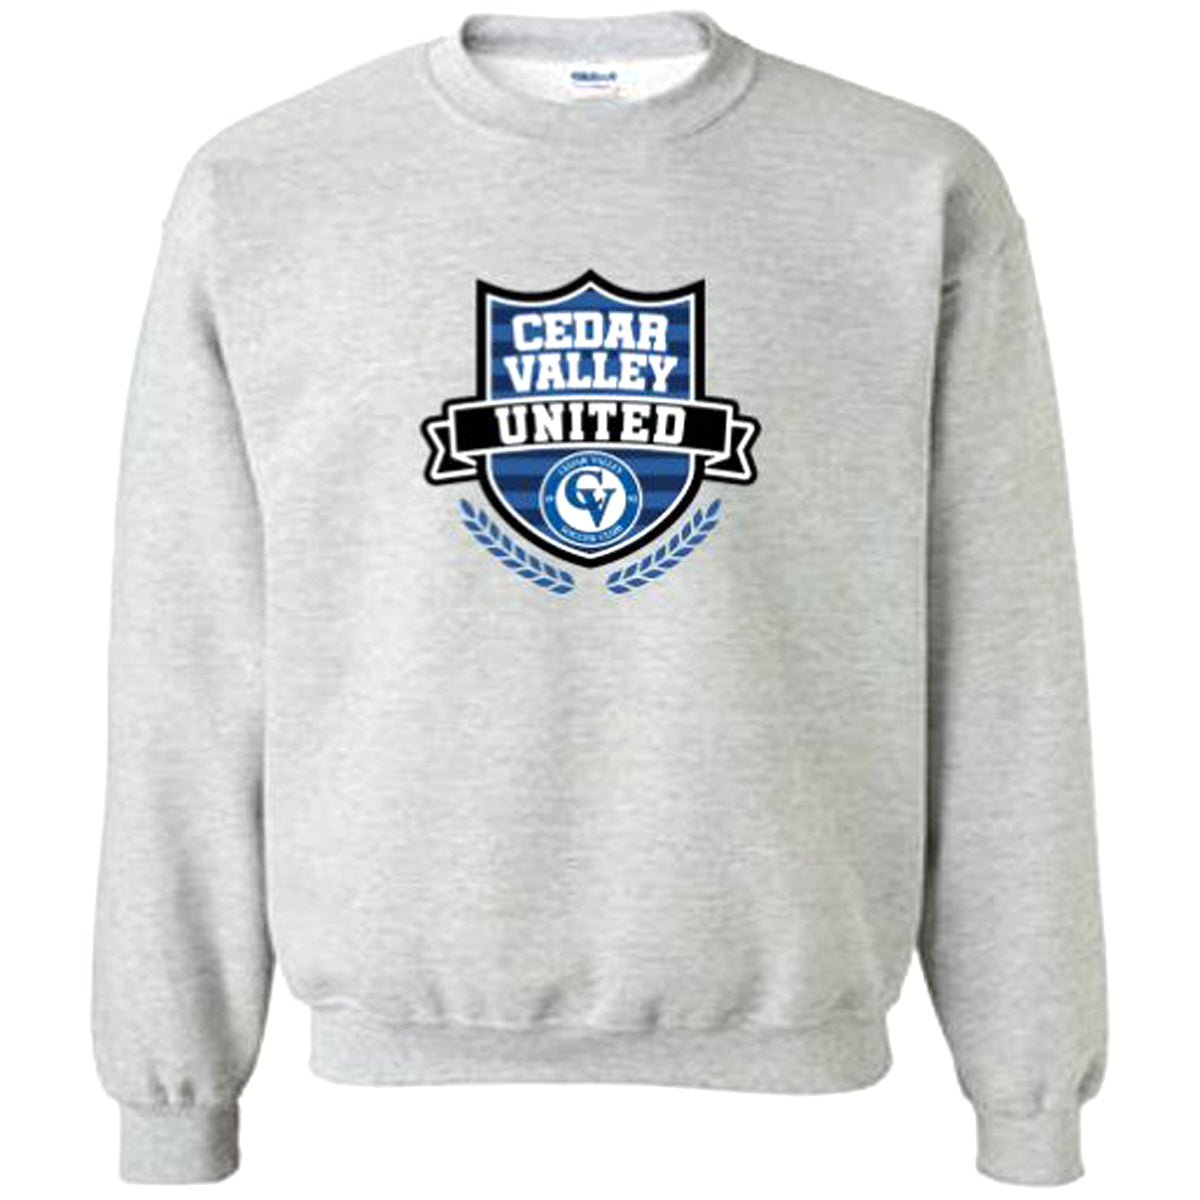 Cedar Valley Soccer Club Heavy Blend Crewneck Sweatshirt Sweatshirt Gildan Men's Small Sport Grey 